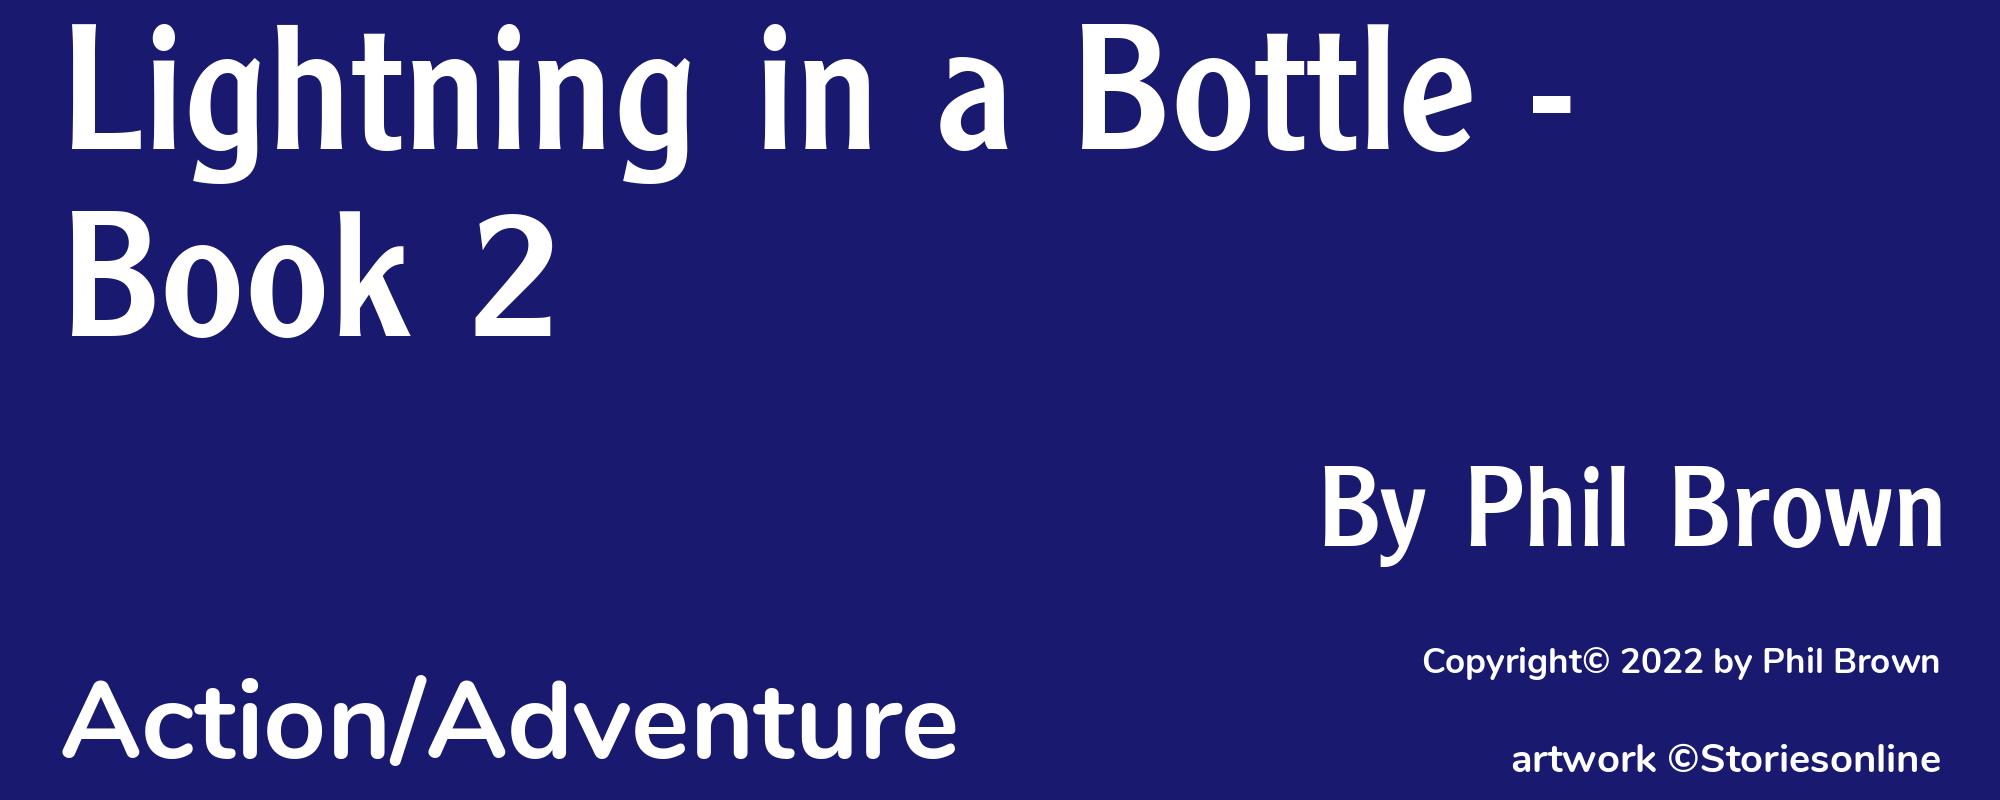 Lightning in a Bottle - Book 2 - Cover